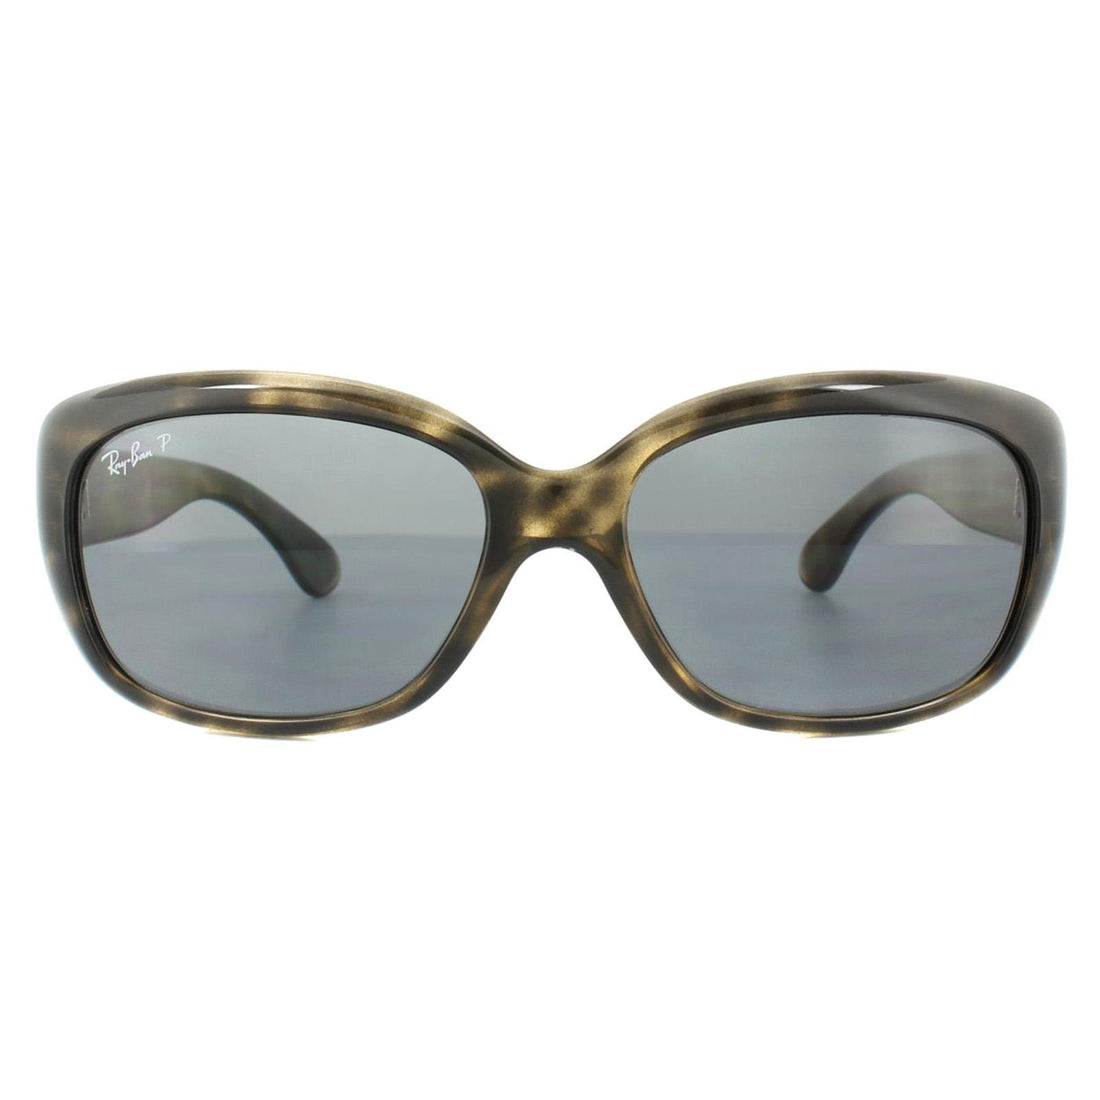 Ray-Ban Jackie Ohh RB4101 Sunglasses Tortoise Grey Gradient Polarized